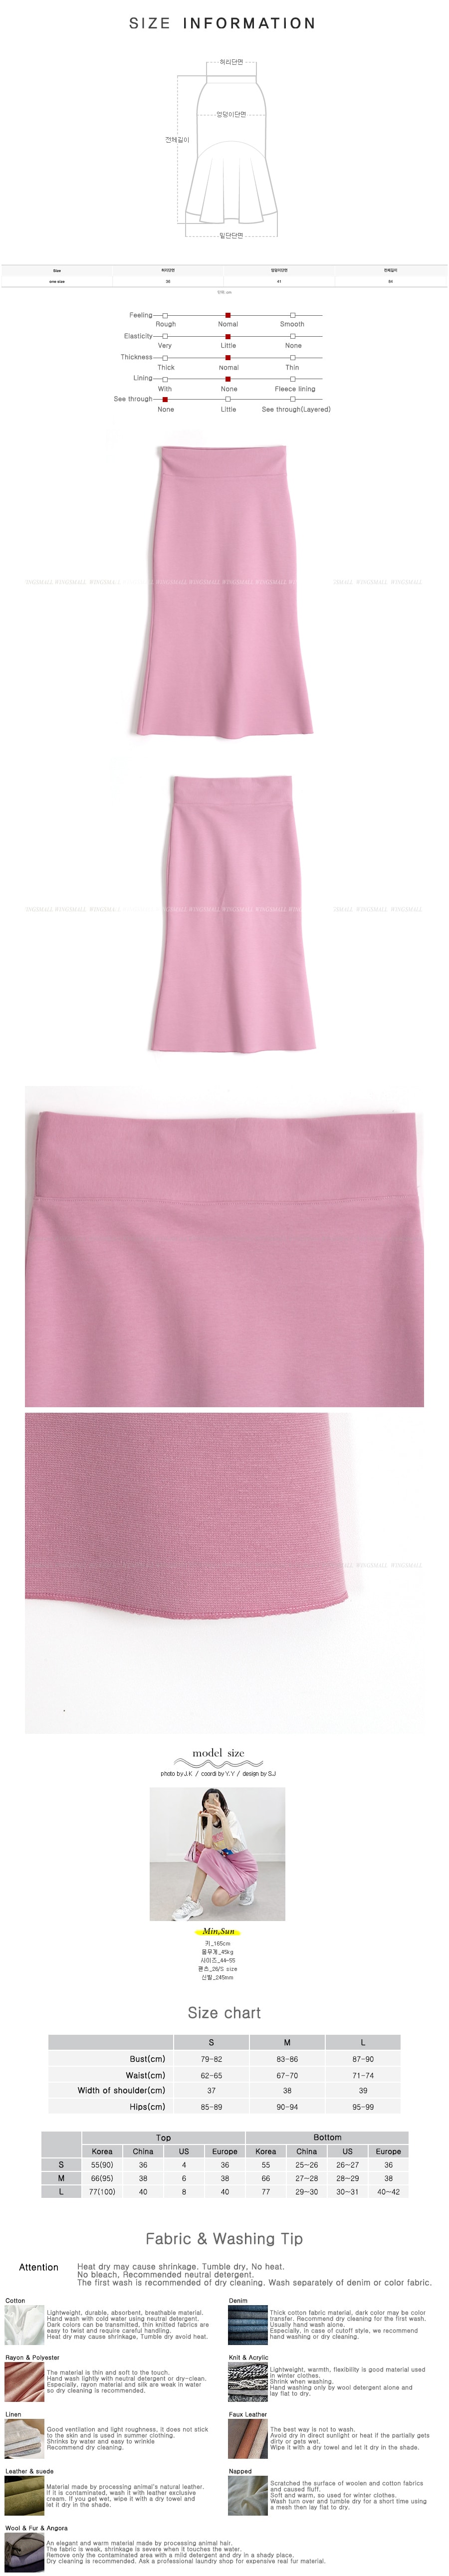 High Waist A-Line Midi Skirt #Pink One Size(S-M)